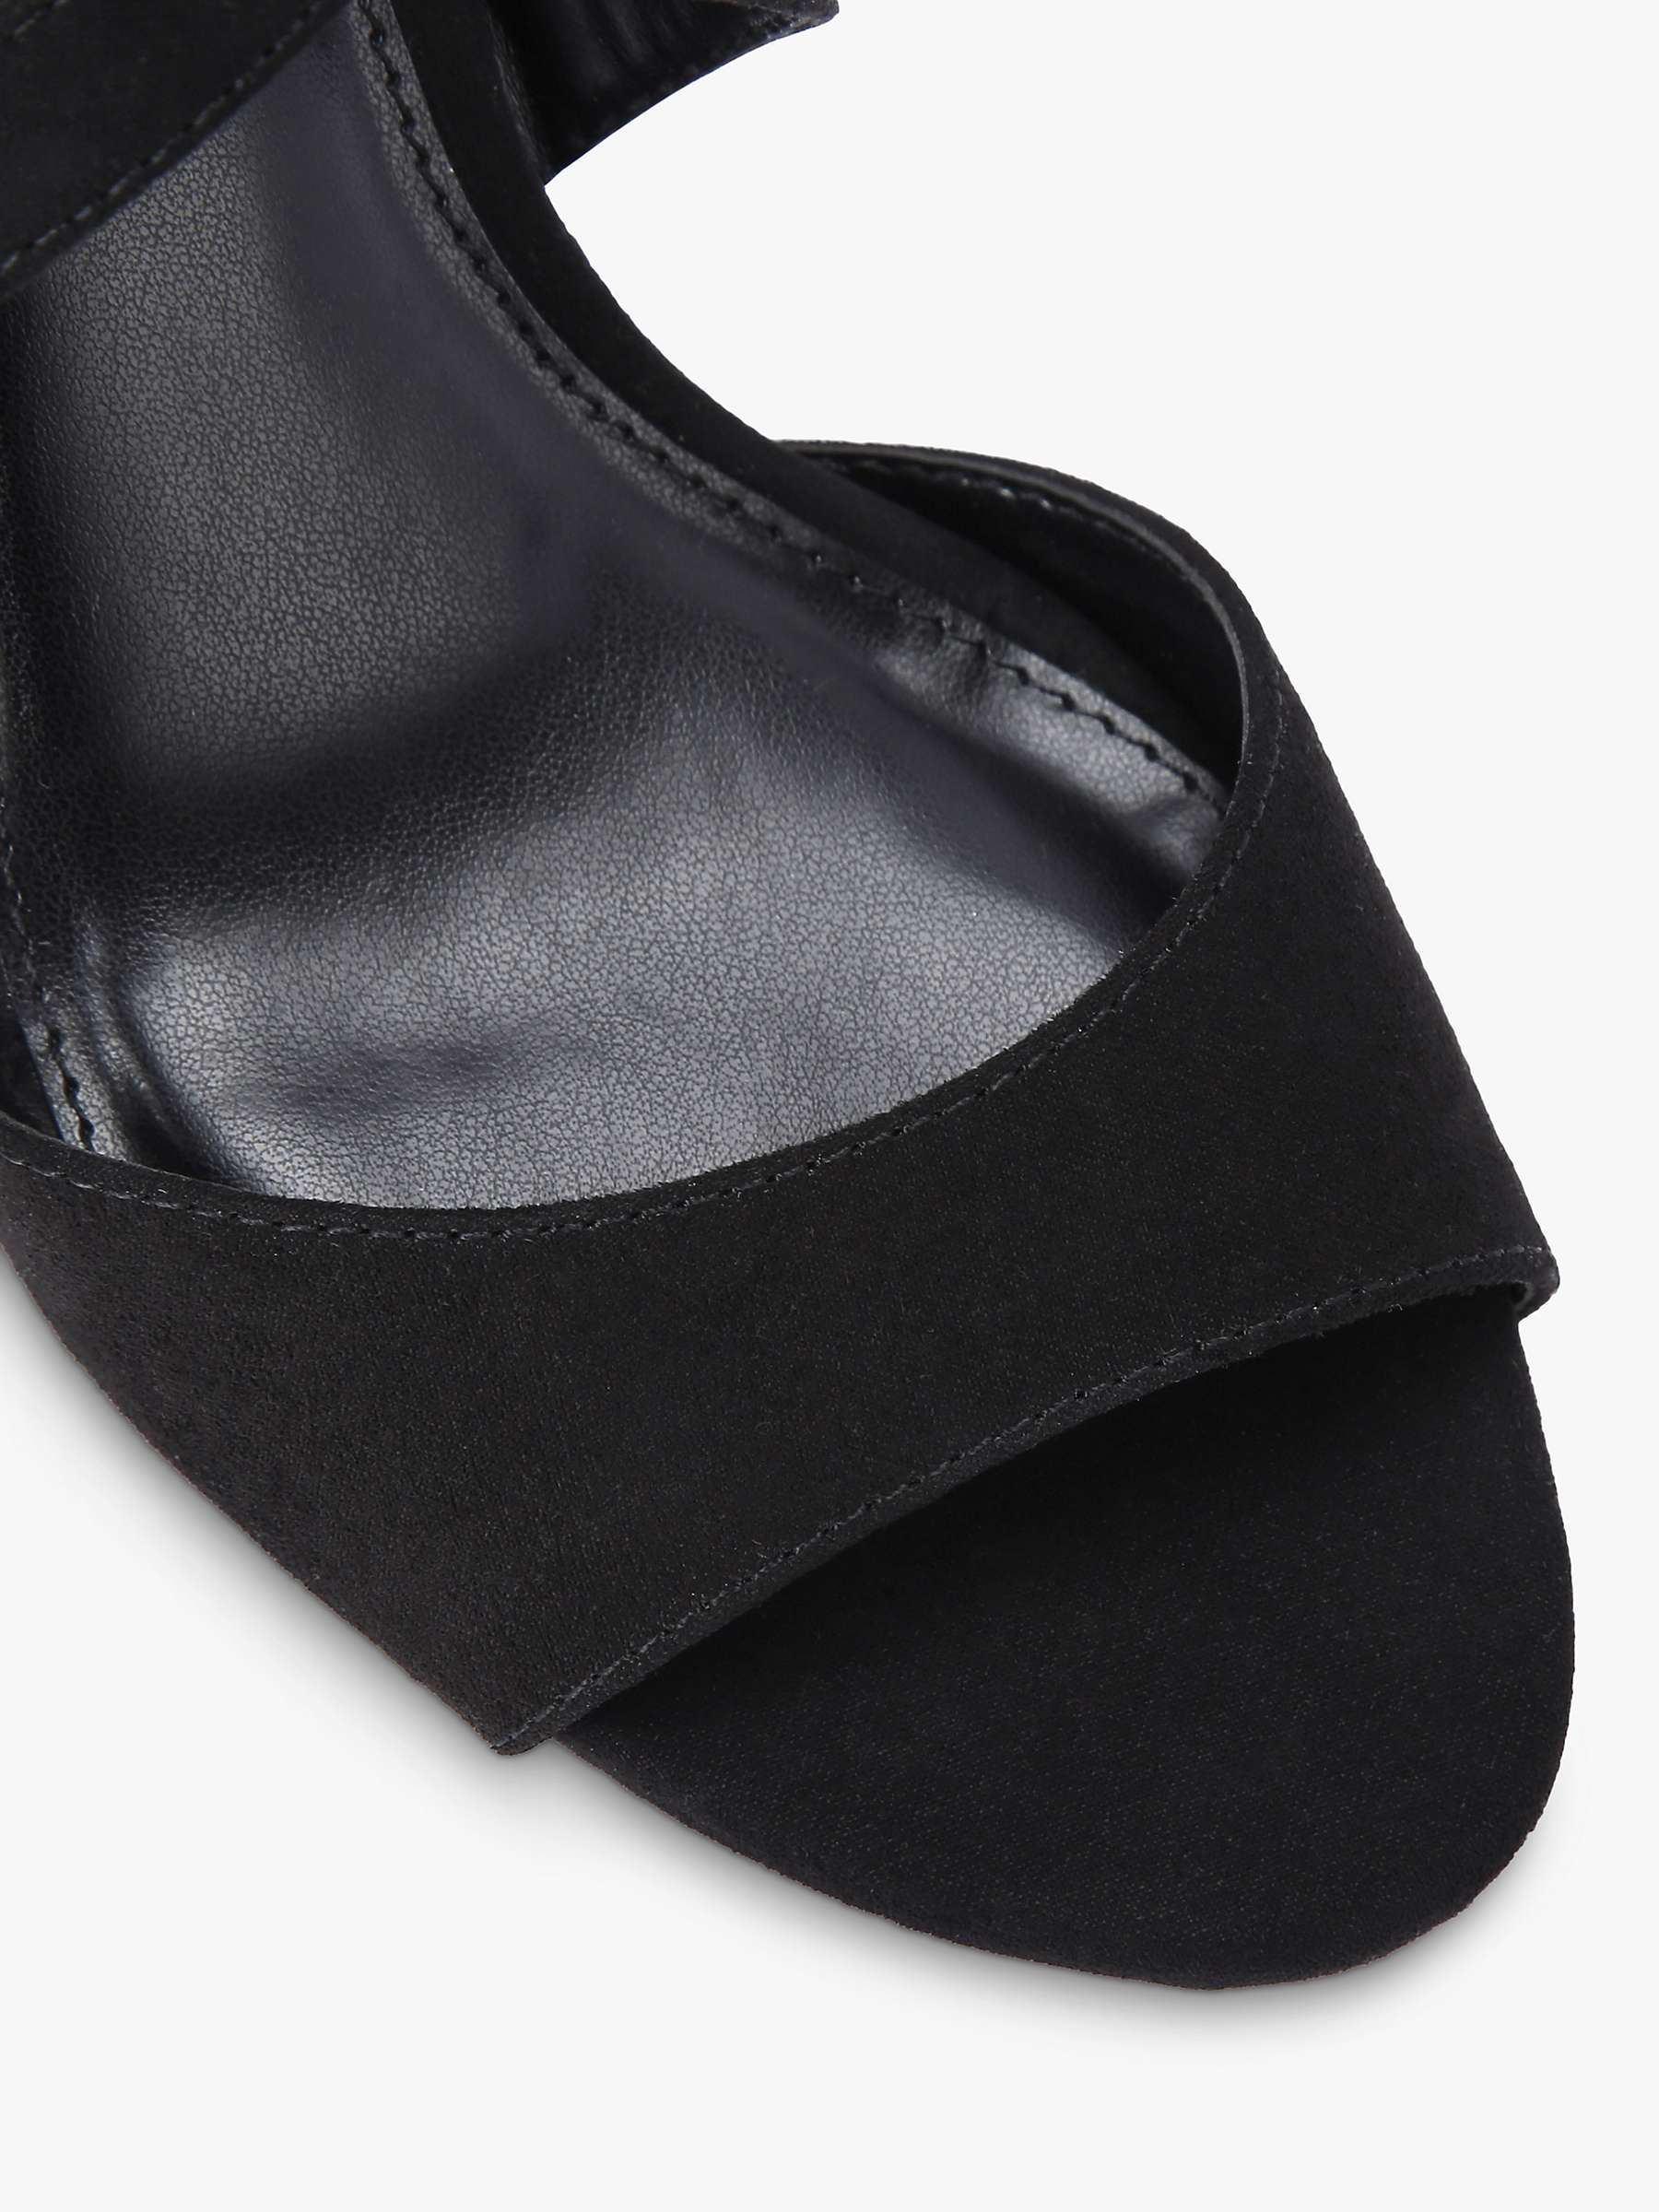 Carvela Kross Strappy Stiletto Heel Sandals, Black at John Lewis & Partners